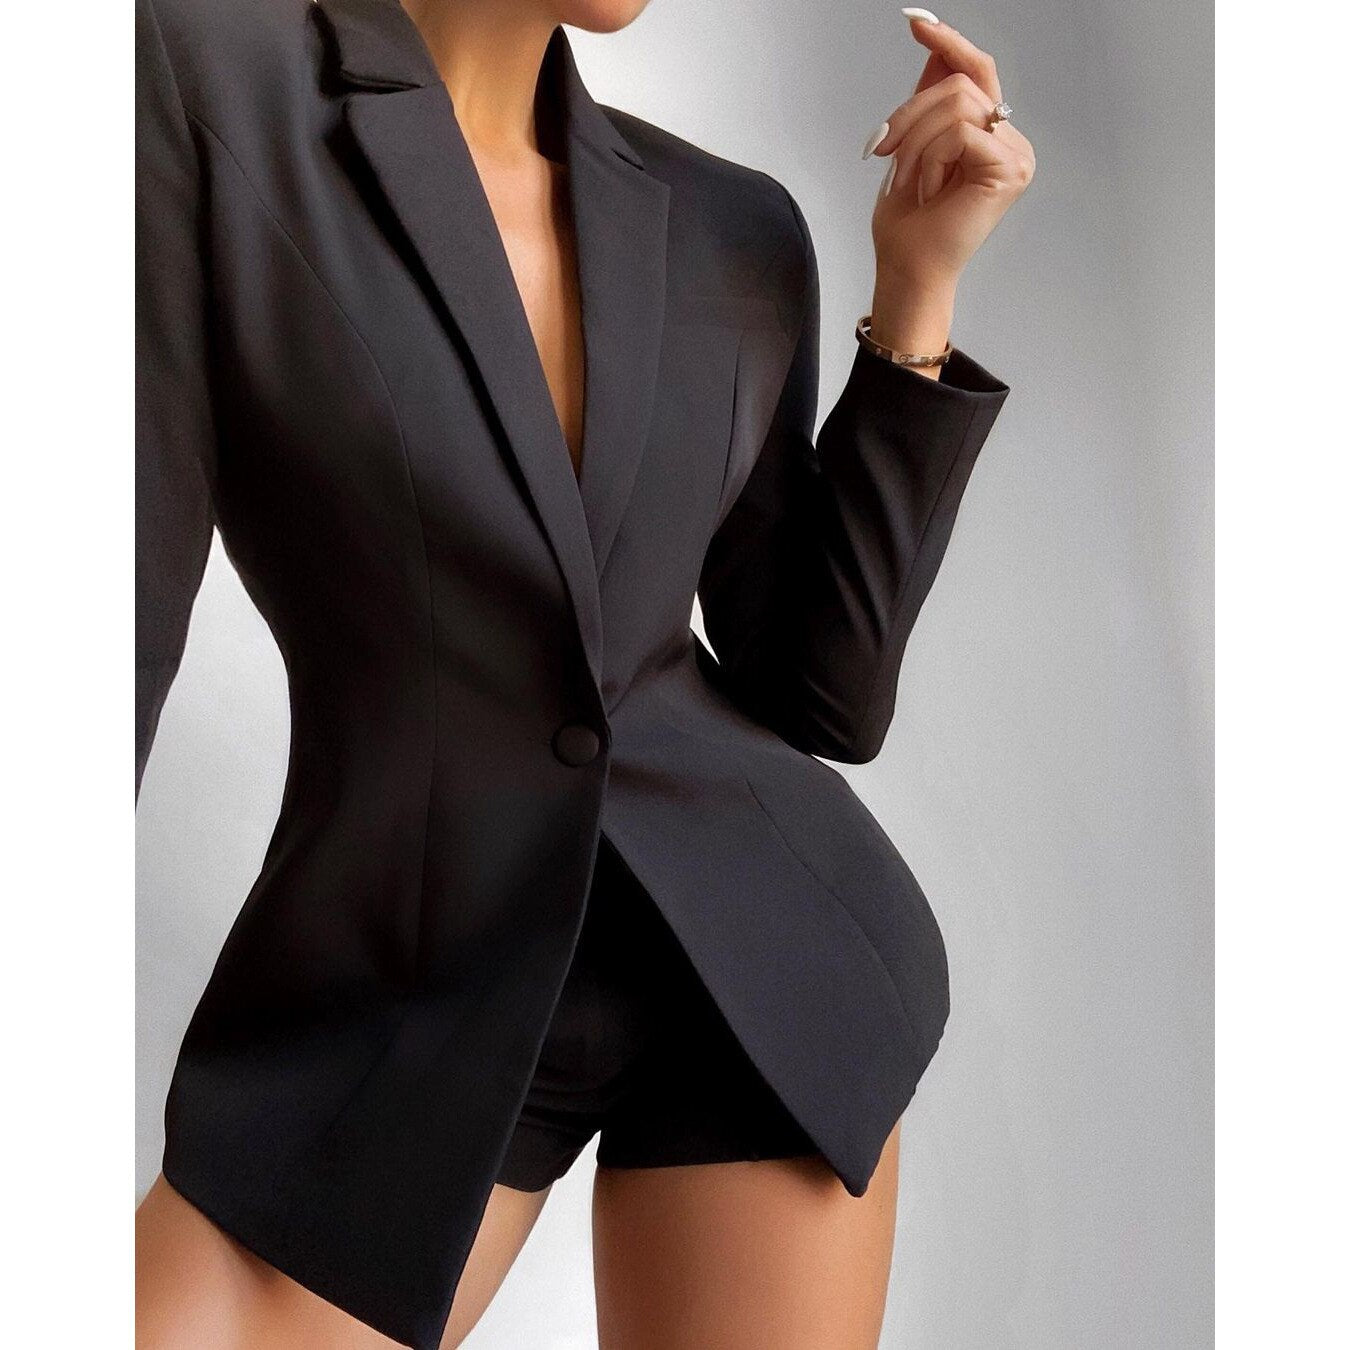 Women's Office V Neck Two Piece Blazer Suit